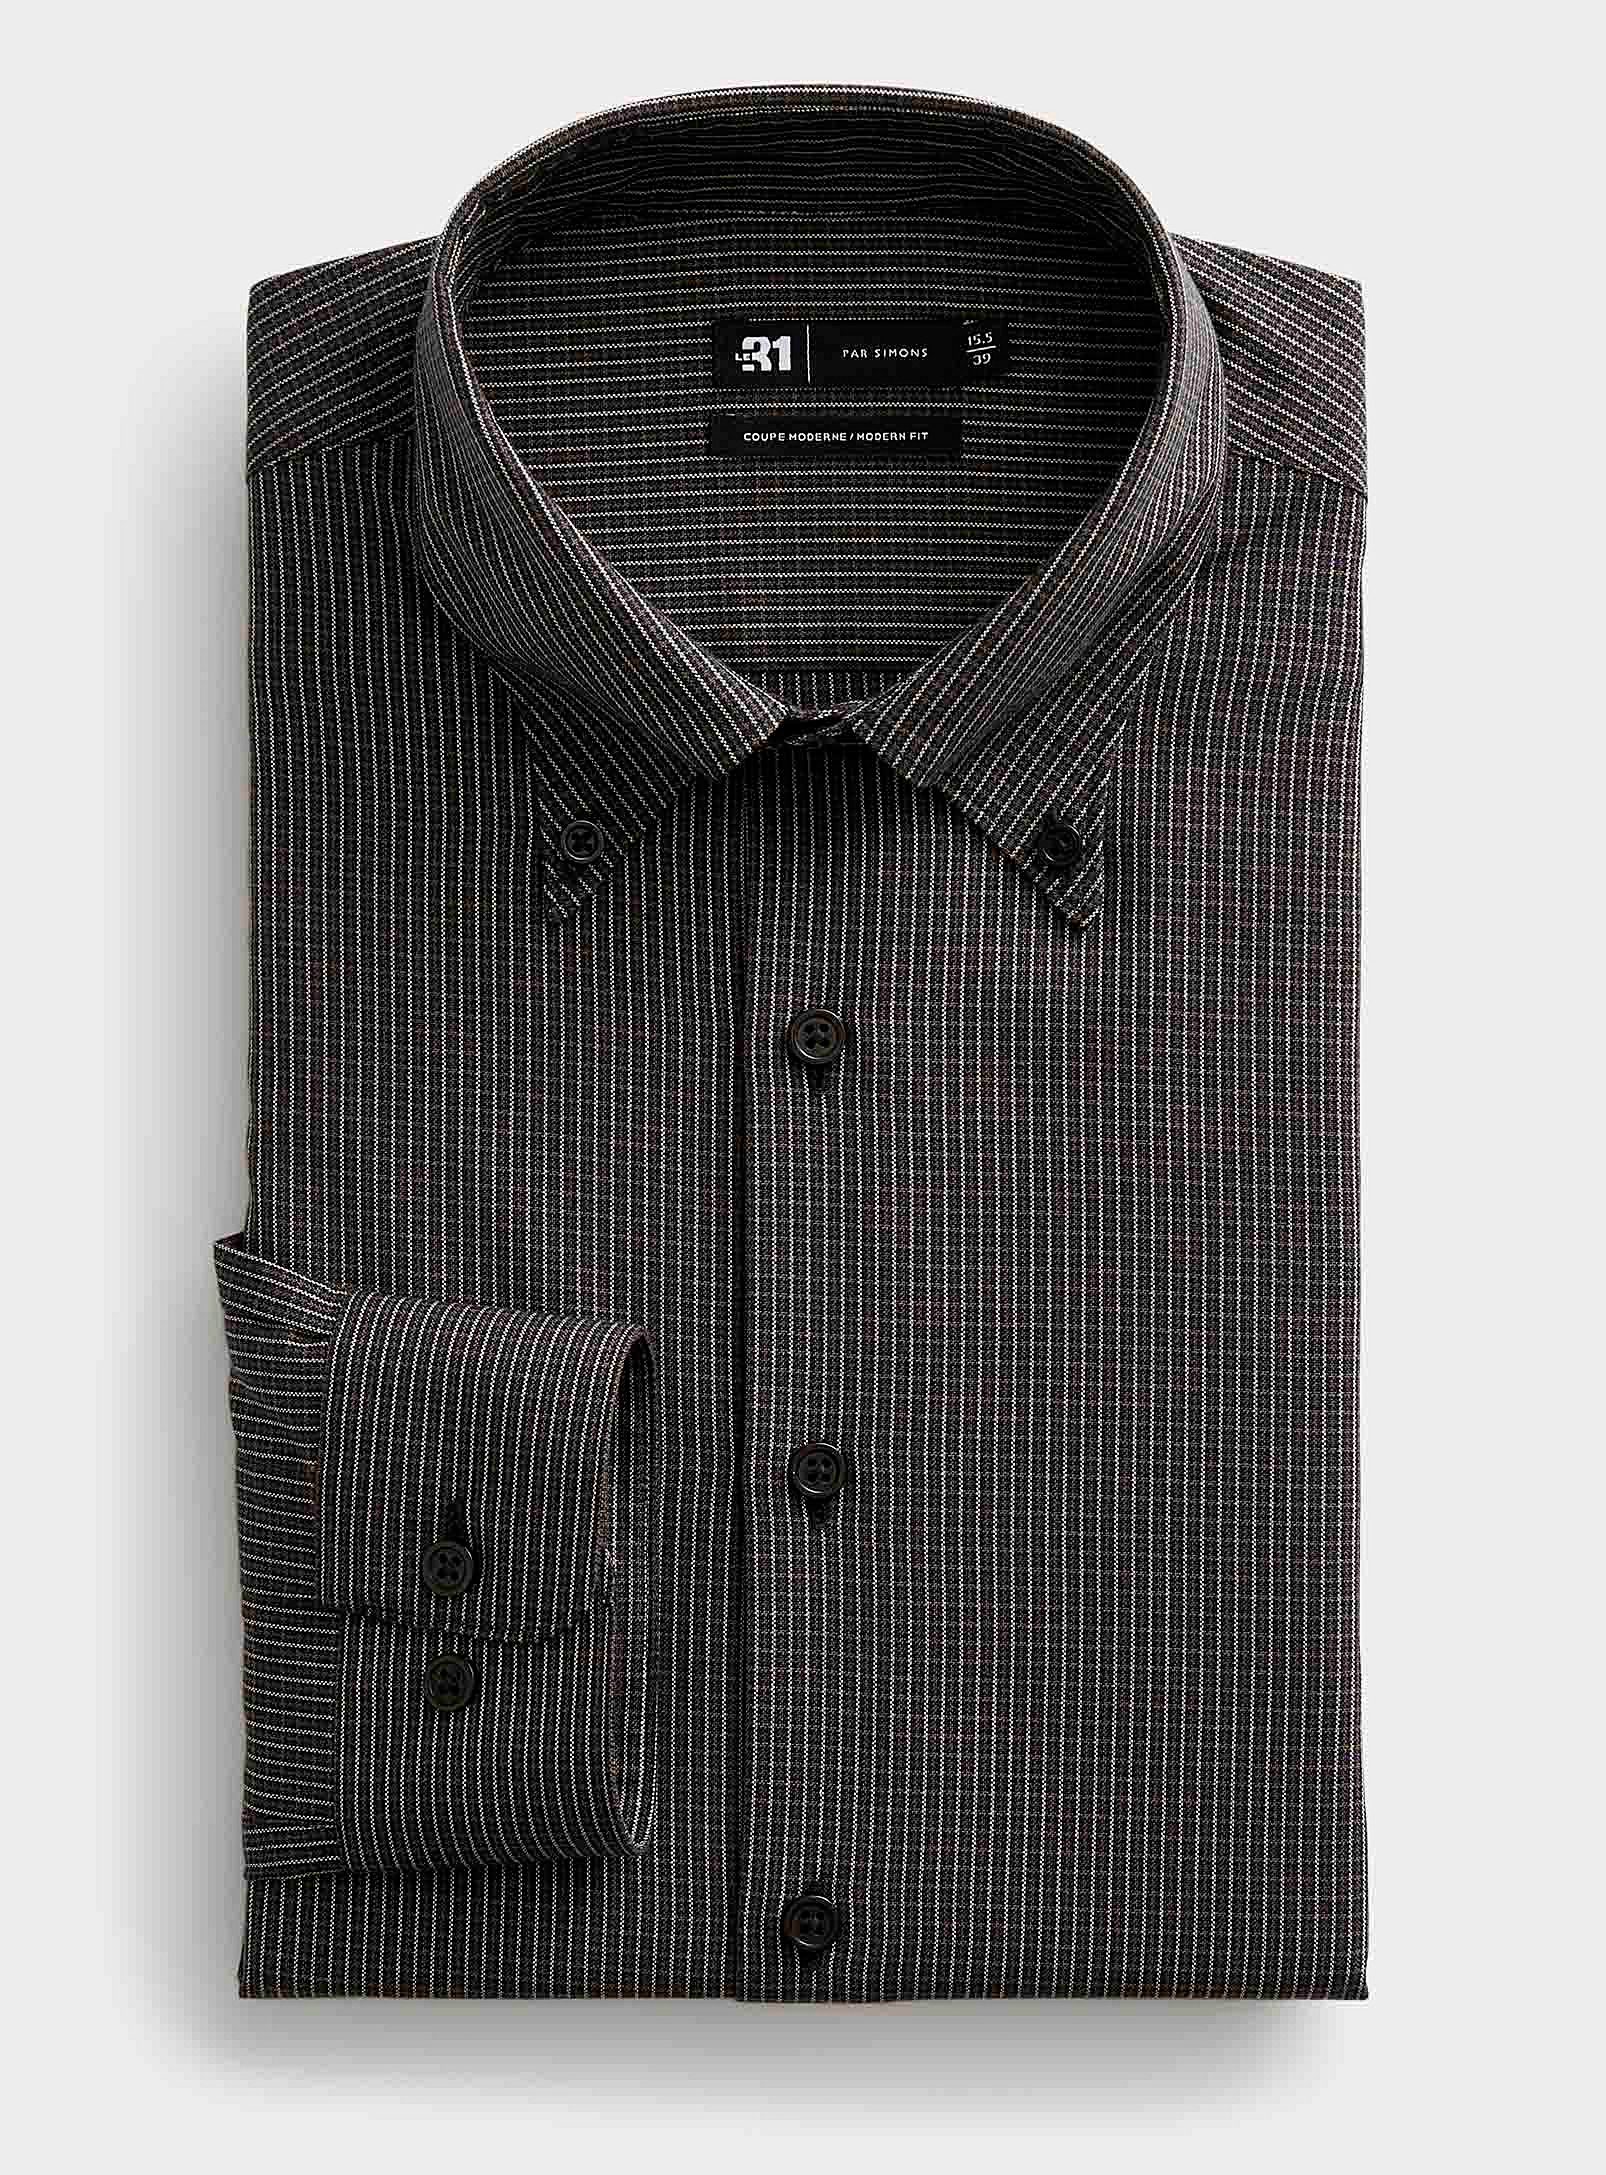 Le 31 - Men's Woven mini-check shirt Modern fit